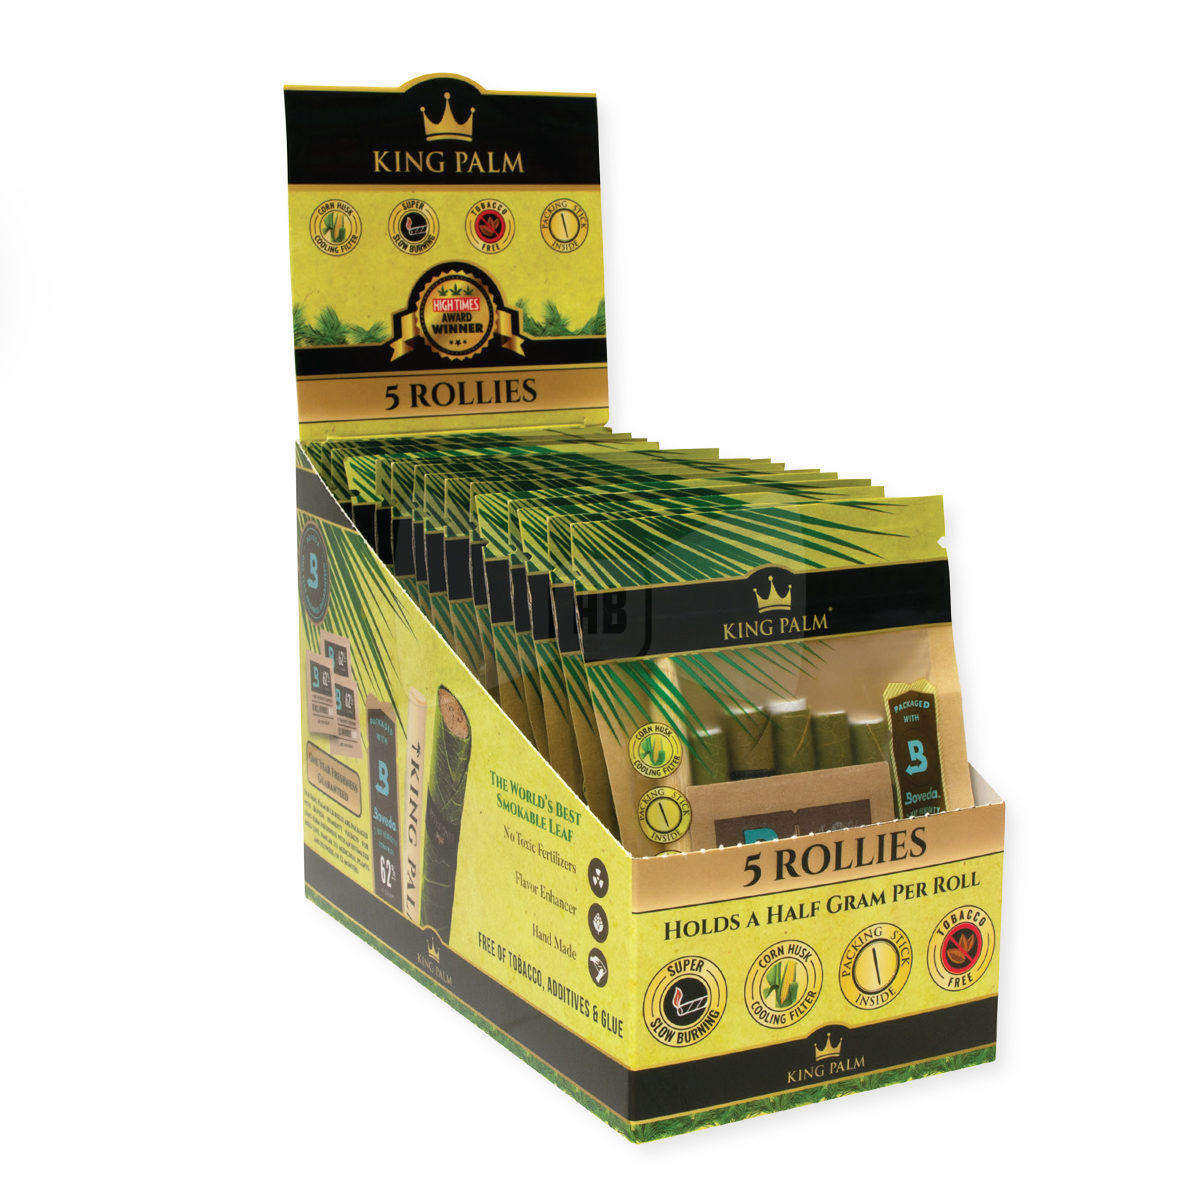 King Palm Rollie Size Rolls Full Box (15 Packs)